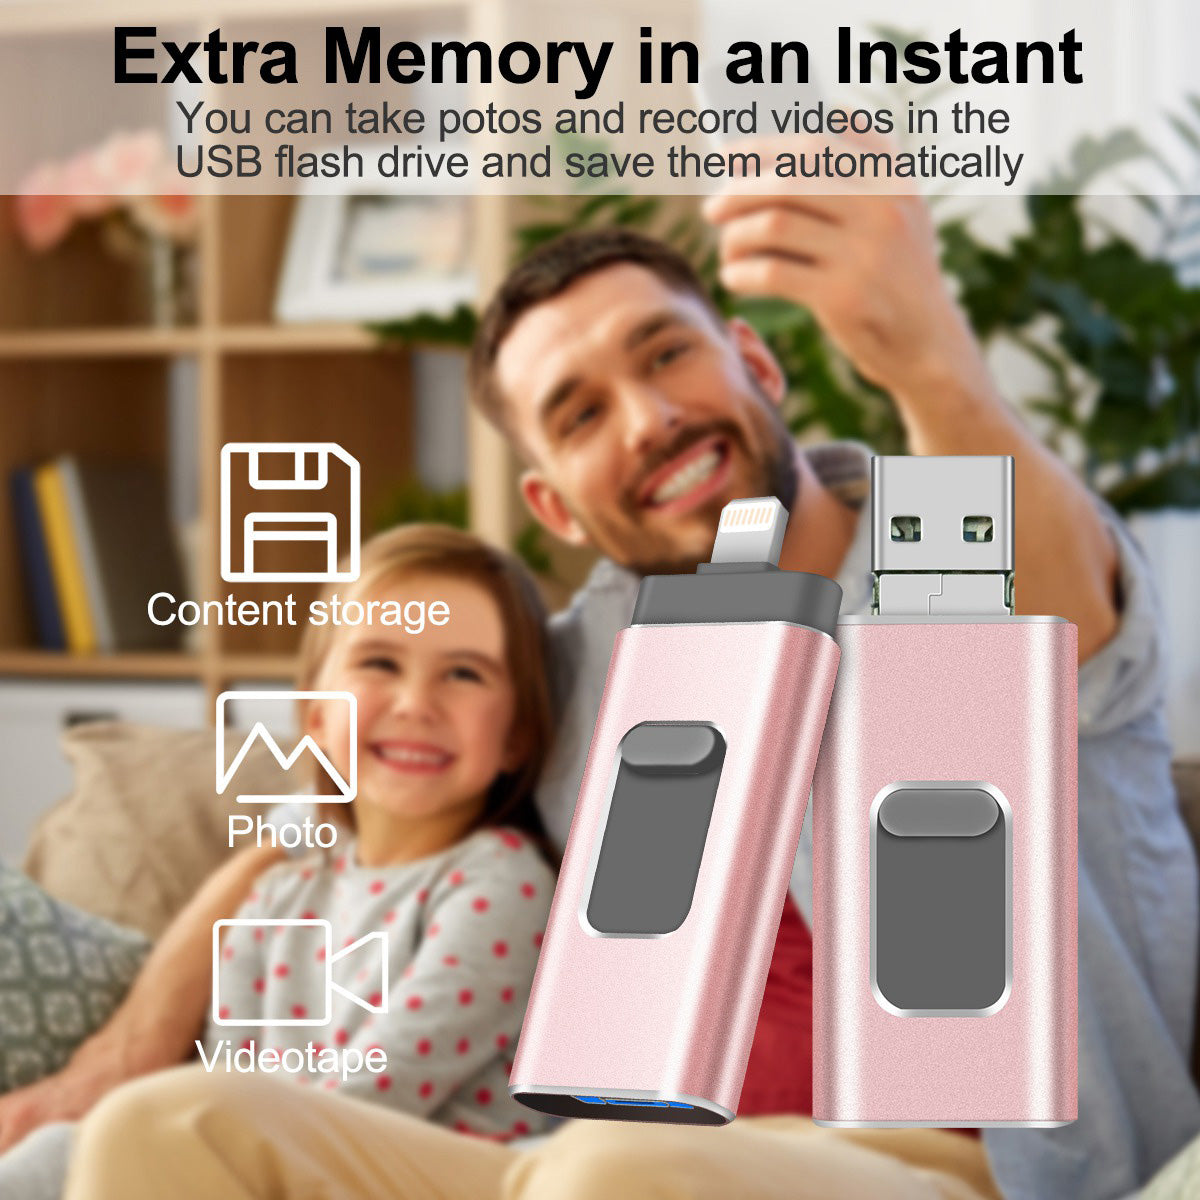 Uniqkart R-01B 64GB Driver Free USB 3.0 Flash Drive USB Memory Stick Thumb Drive Photo Stick for iPhone Android PC - Pink